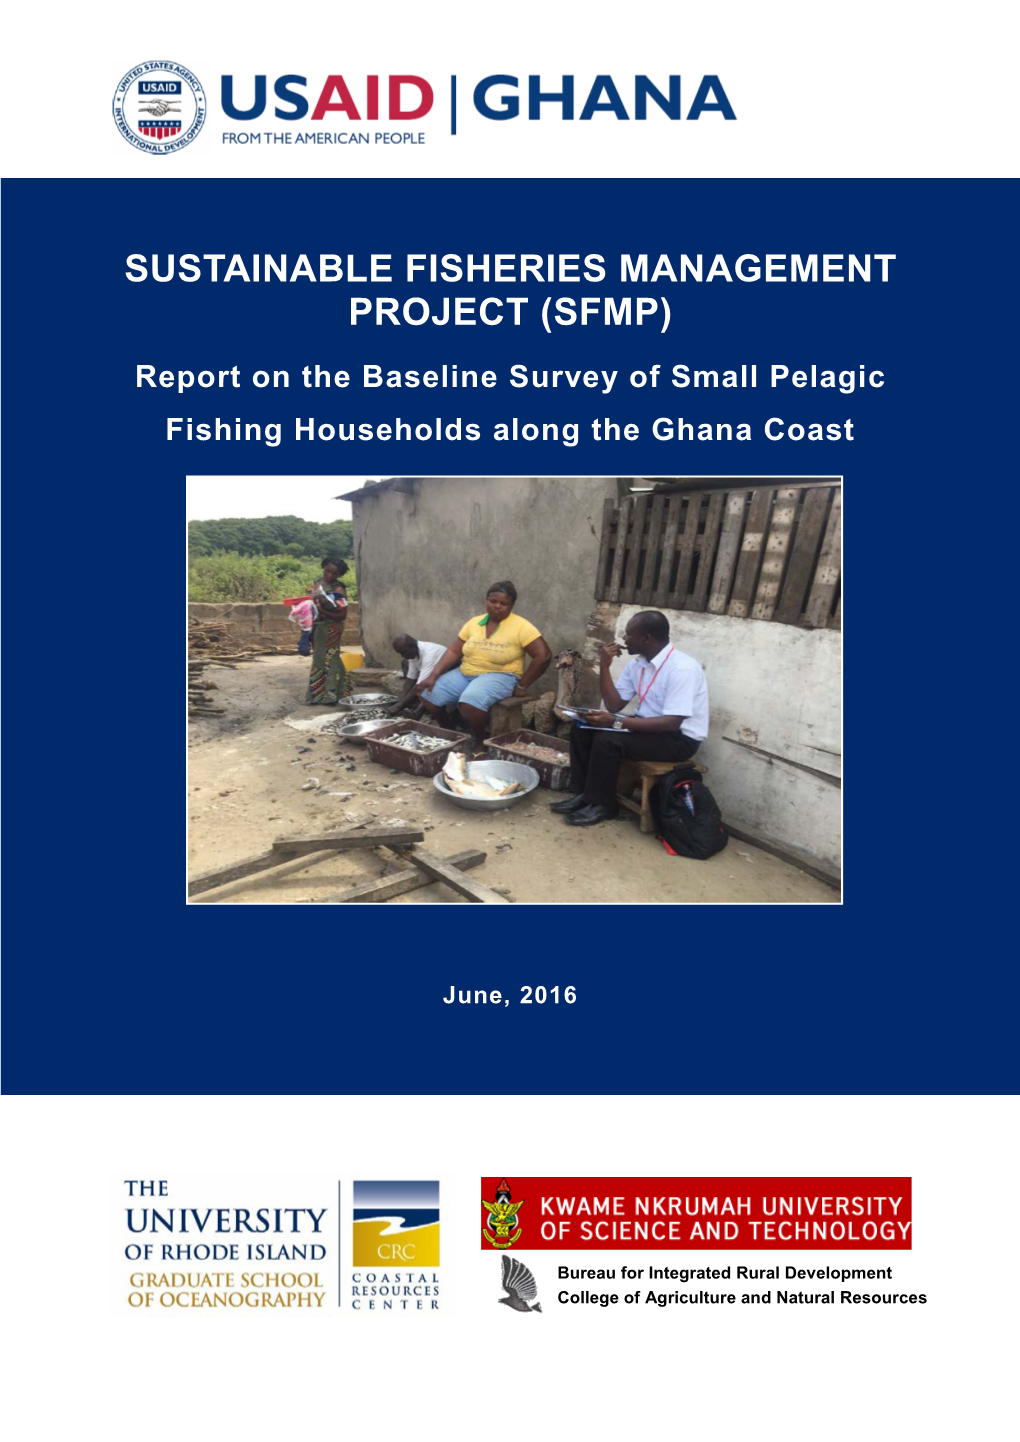 Report on the Baseline Survey of Small Pelagic Fishing Households Along the Ghana Coast